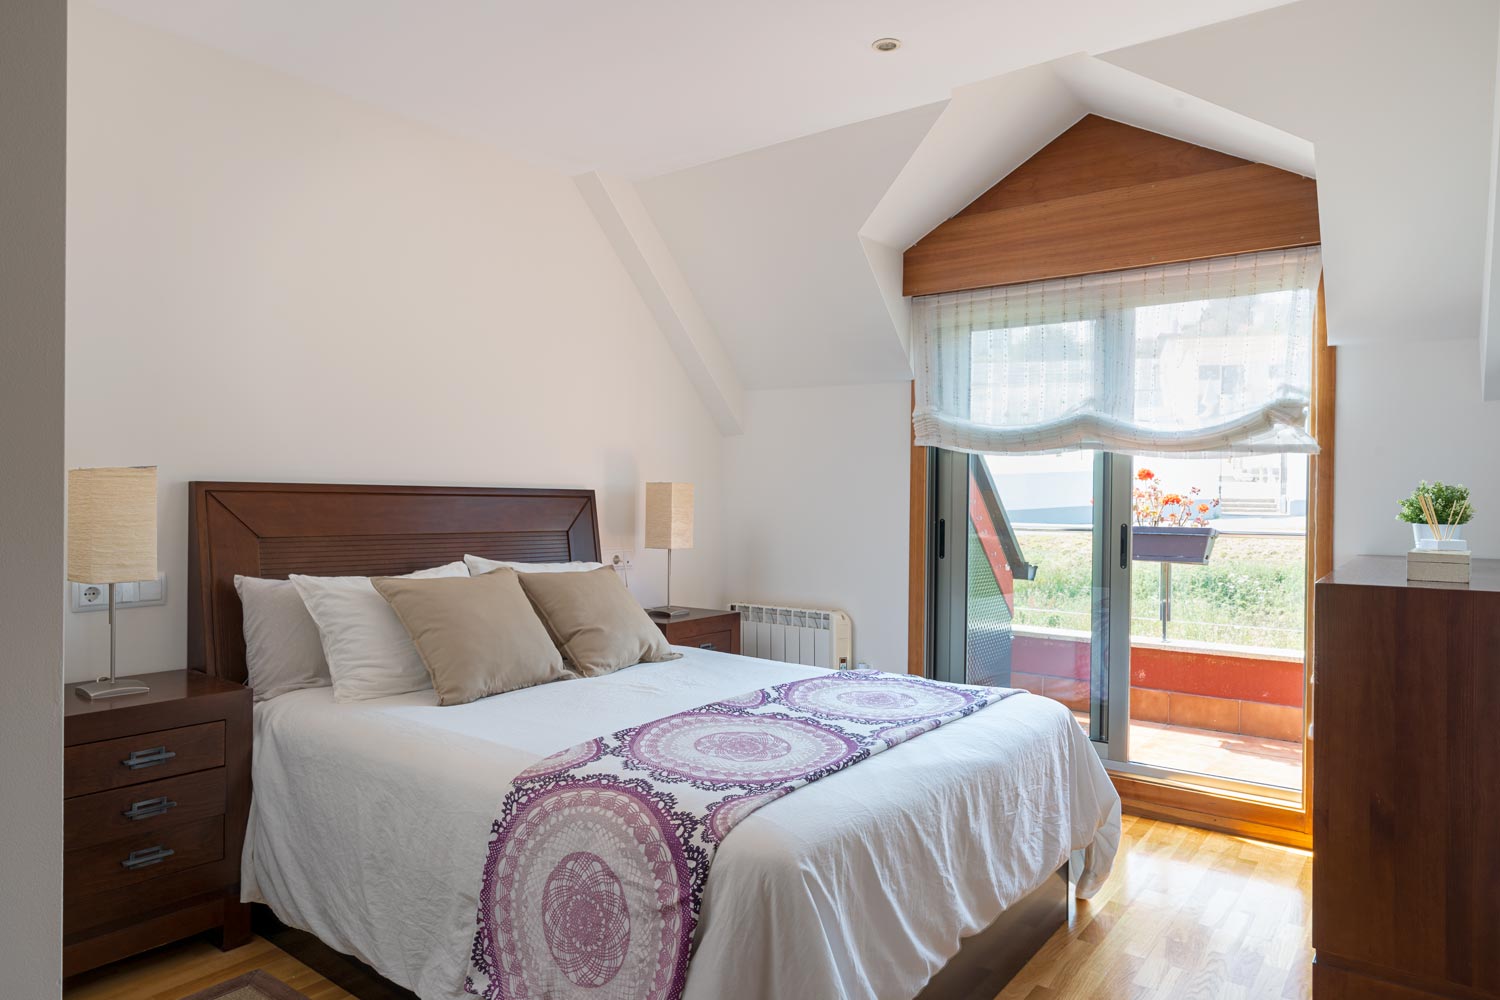 Dormitorio principal abuhardillado con salida a terraza_colores neutros y madera oscura de lineas puras